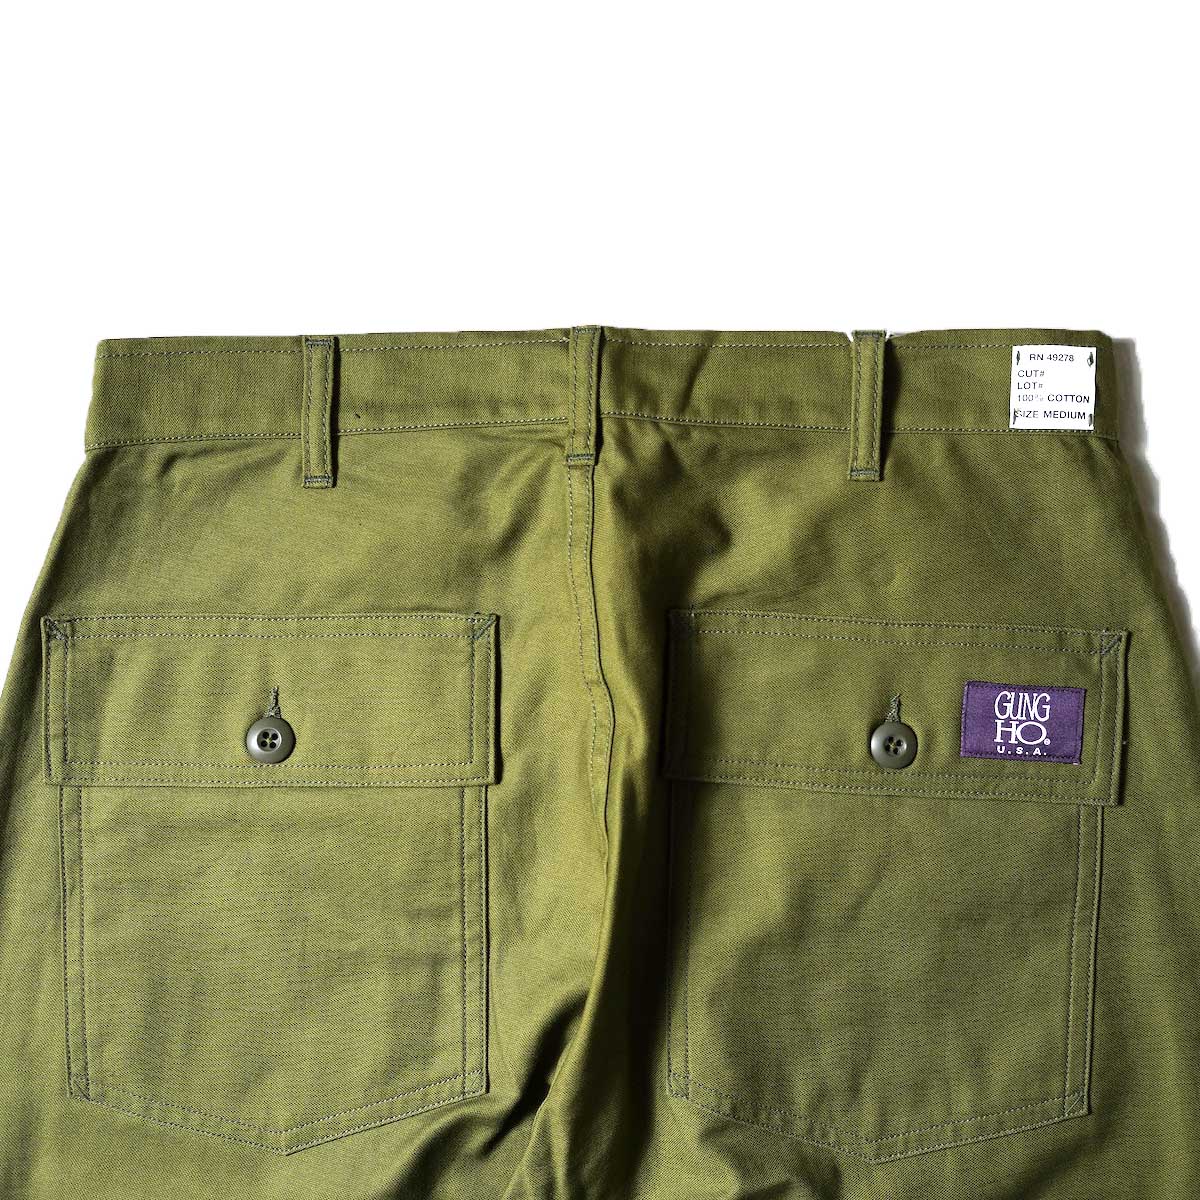 UNIVERSAL PRODUCTS / Gung Ho 1tuck Baker Pants (Olive)ヒップポケット